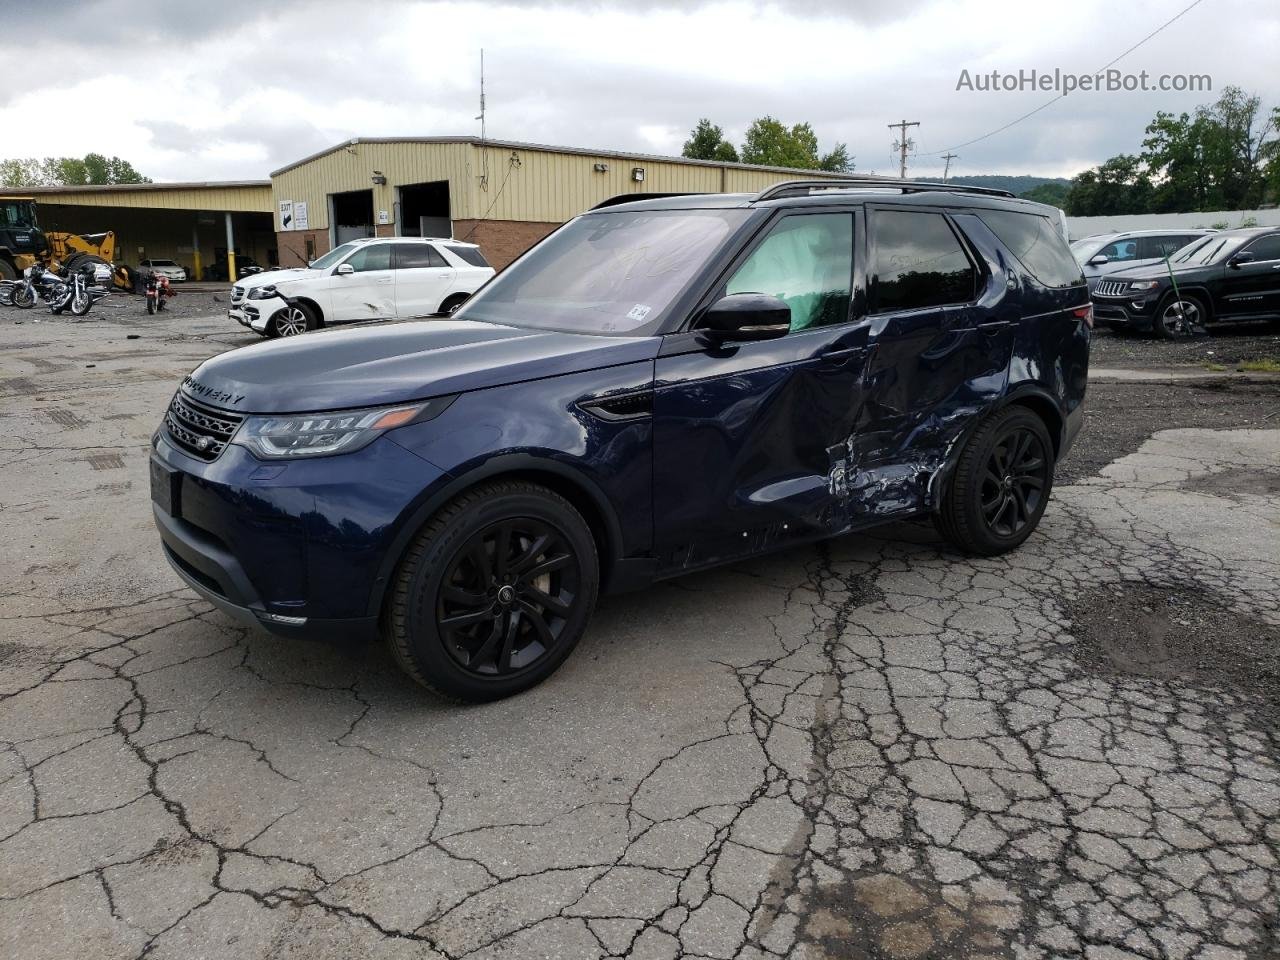 2019 Land Rover Discovery Hse Синий vin: SALRR2RV8KA096148